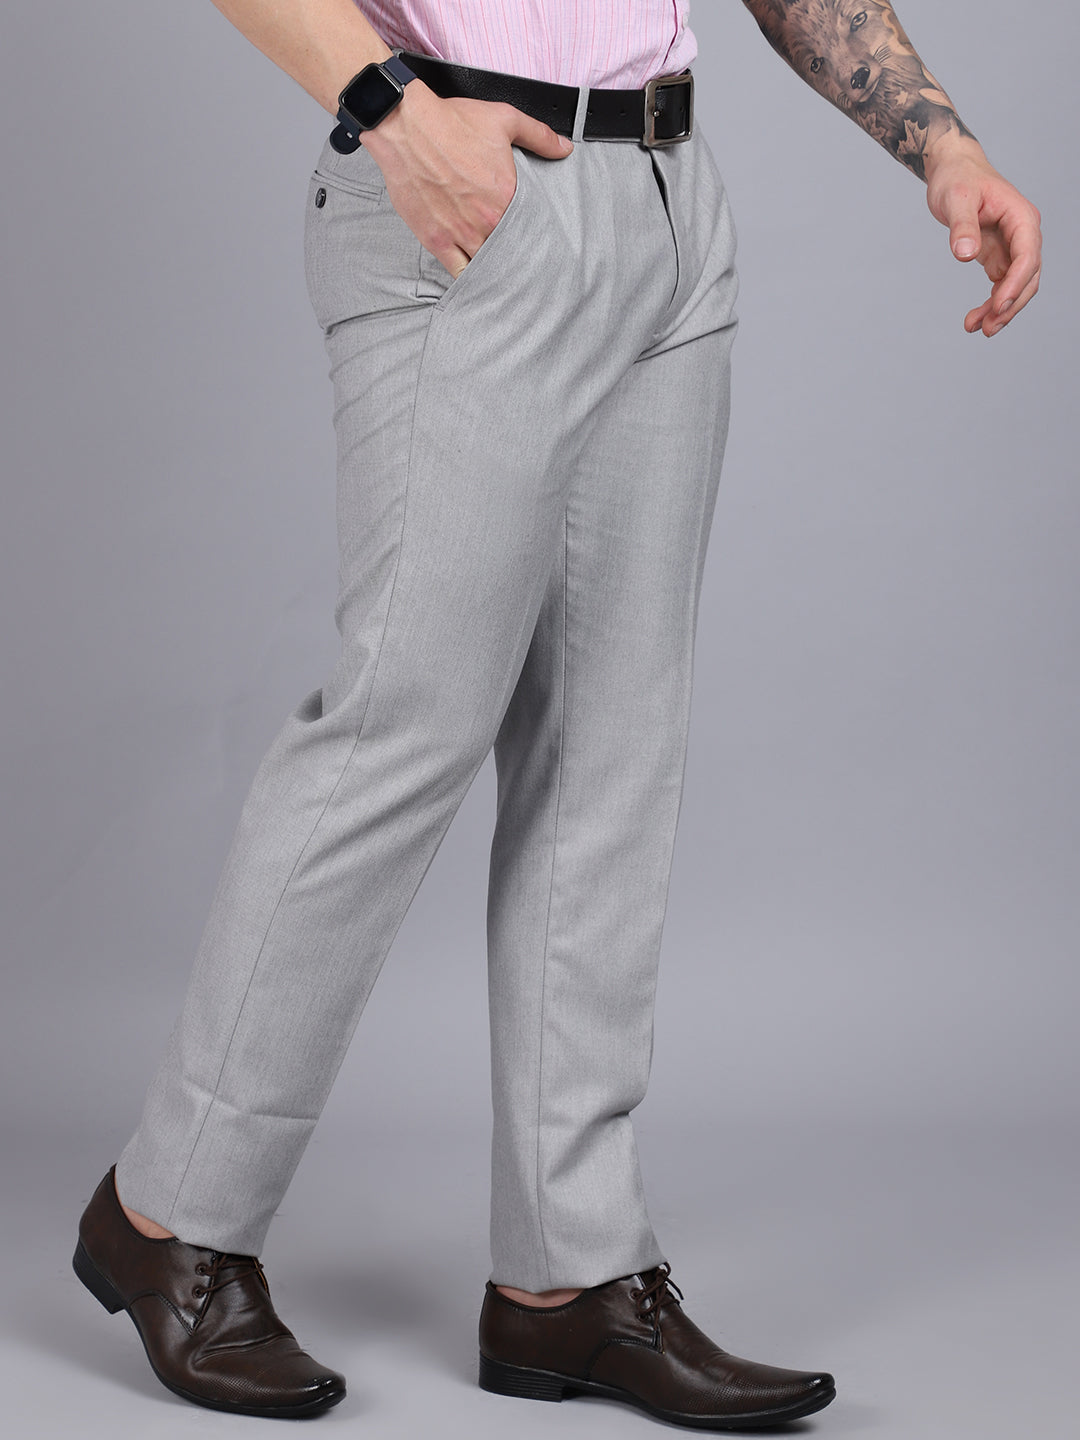 Plain Men Light Grey Formal Trouser, Slim Fit at Rs 290/piece in Bhilwara |  ID: 27523673797